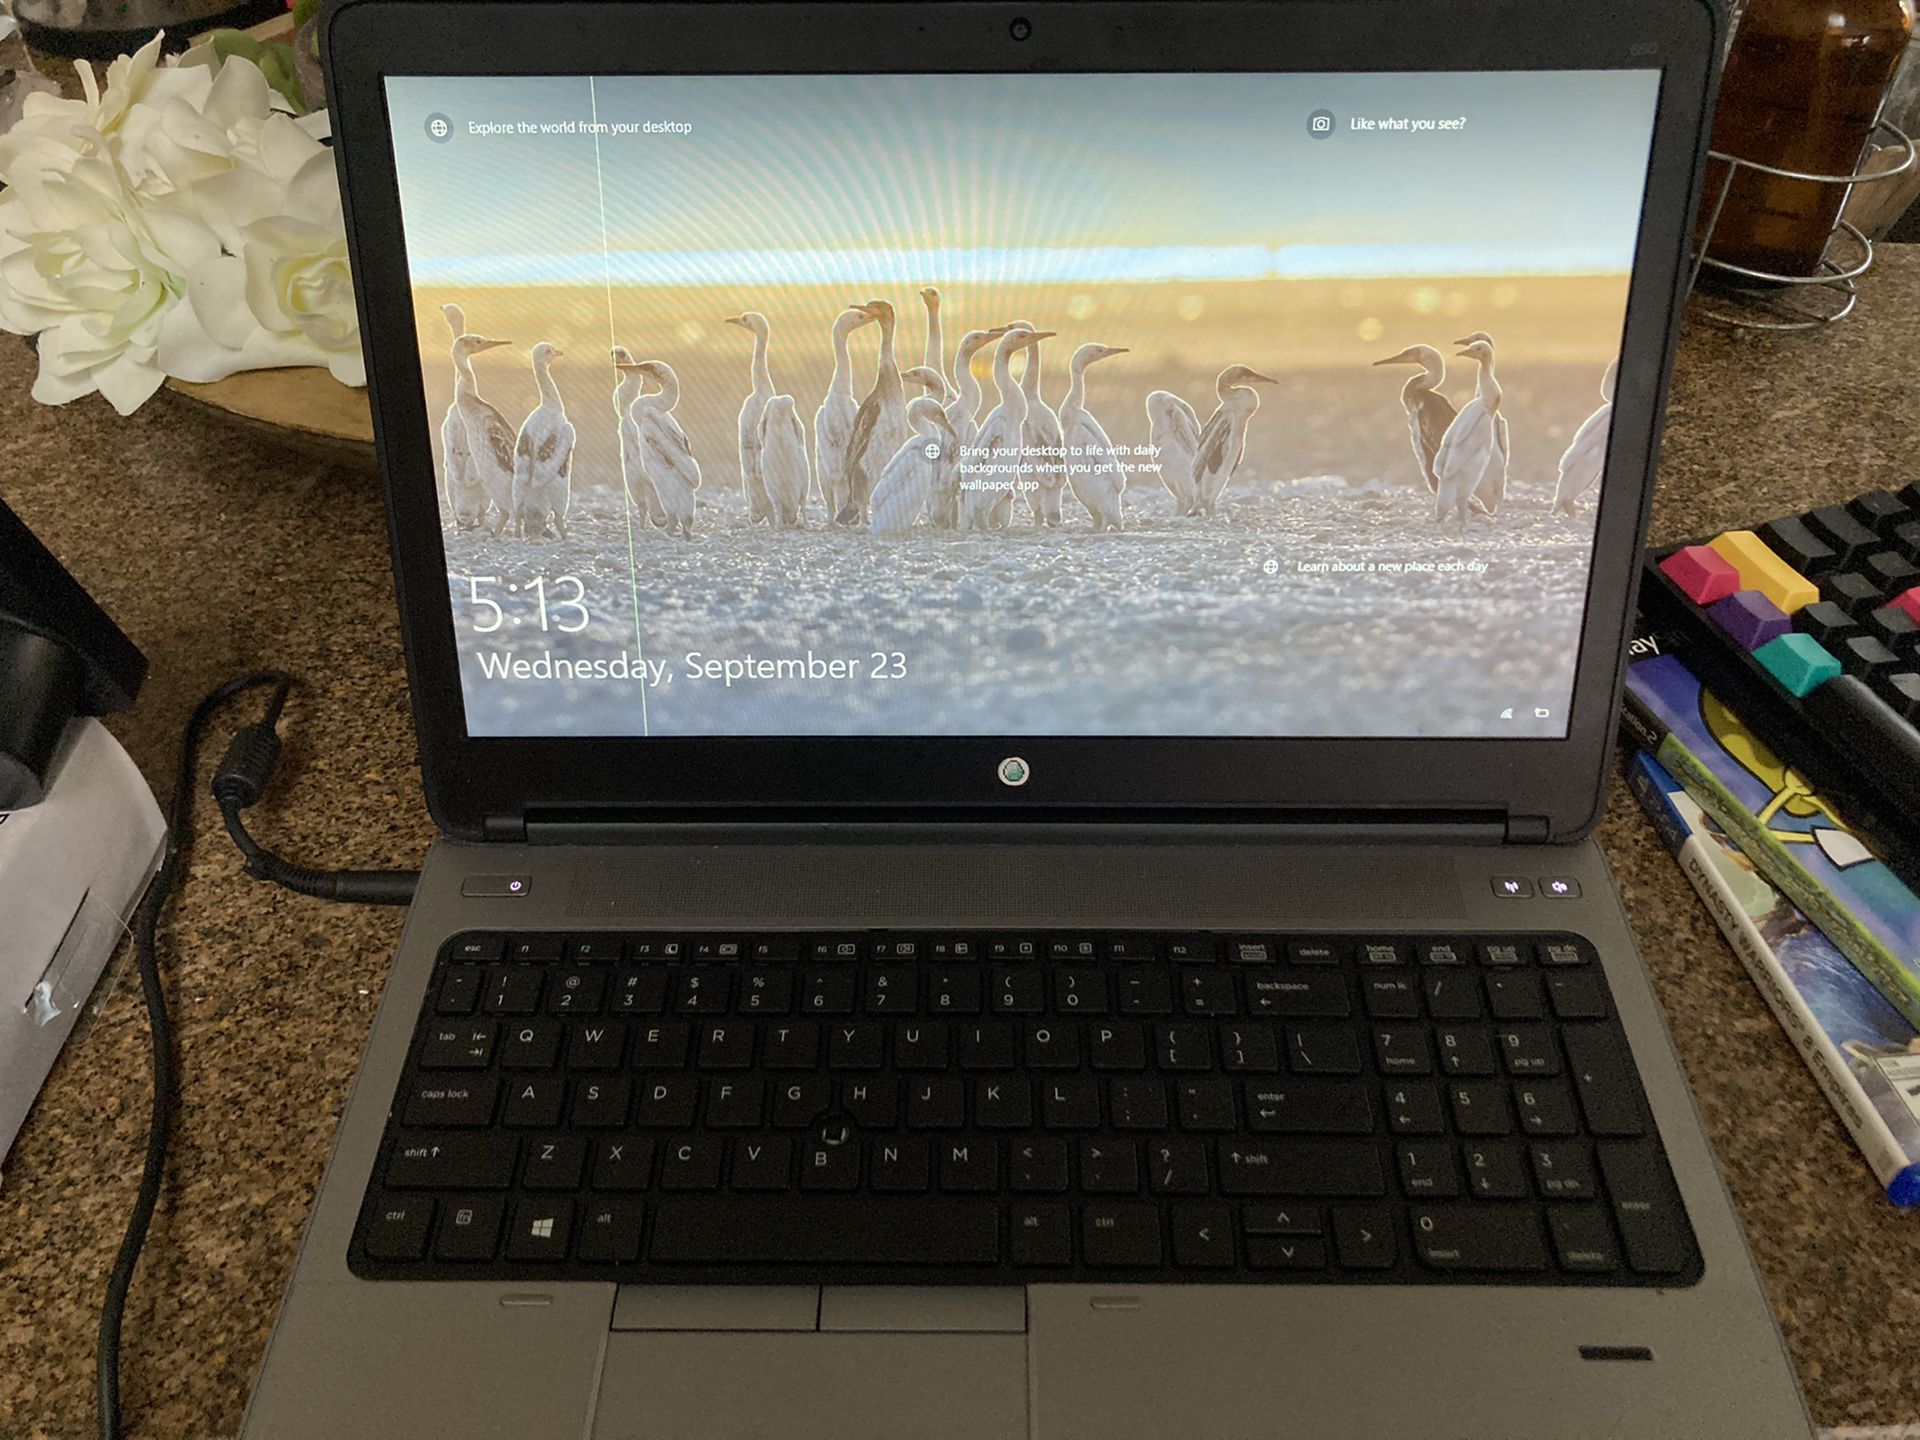 HP 650 G1 Notebook PC. $75